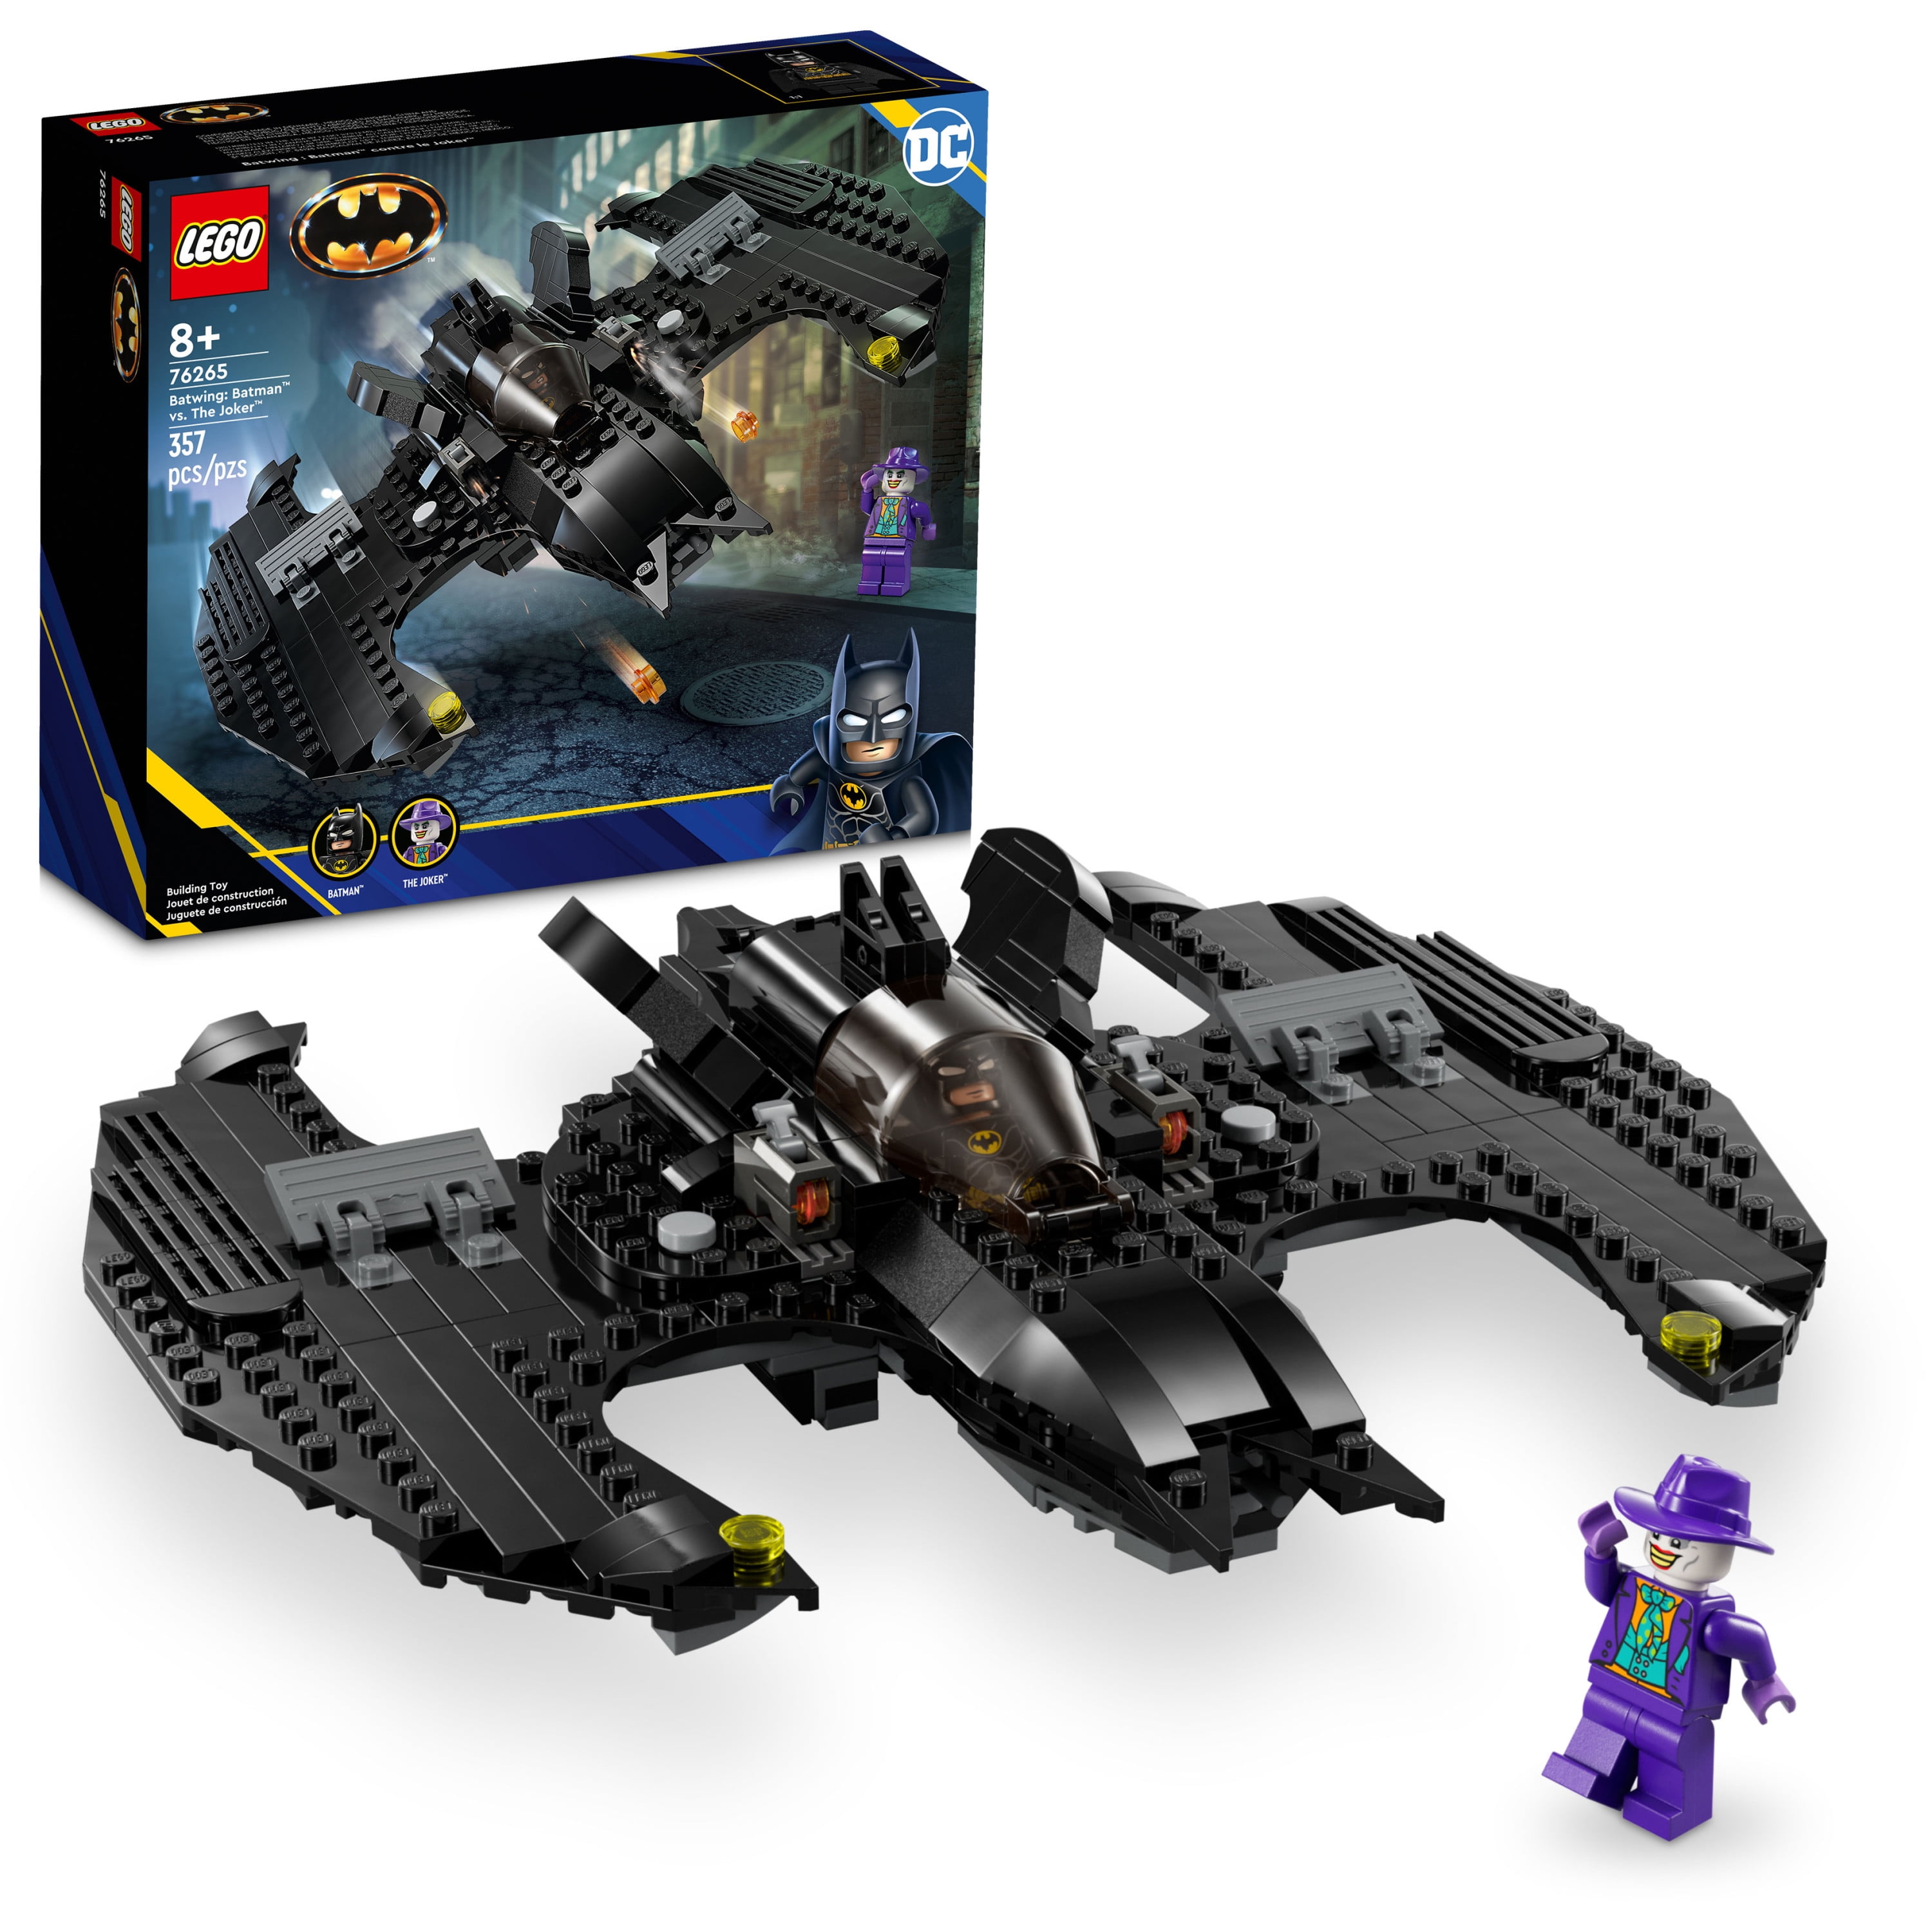  LEGO The Batman Movie Minifigure - Harley Quinn (Pigtails)  2016! : Toys & Games